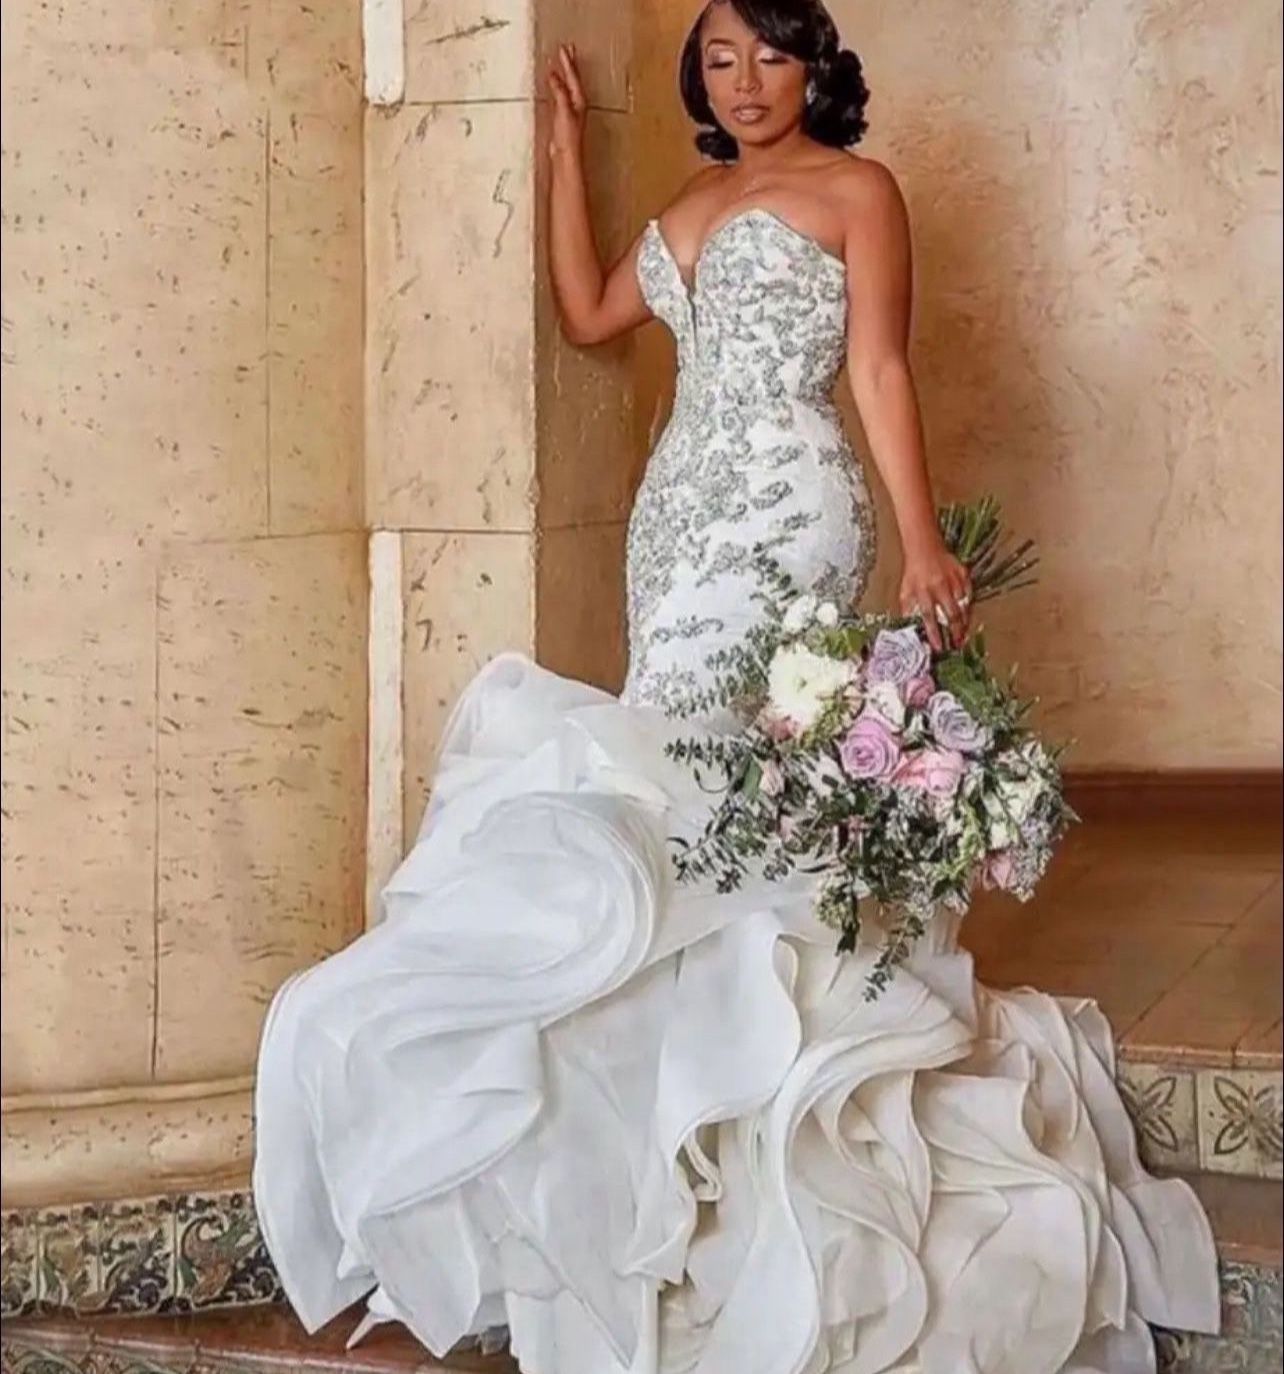 Brand New Wedding Dress Ivory